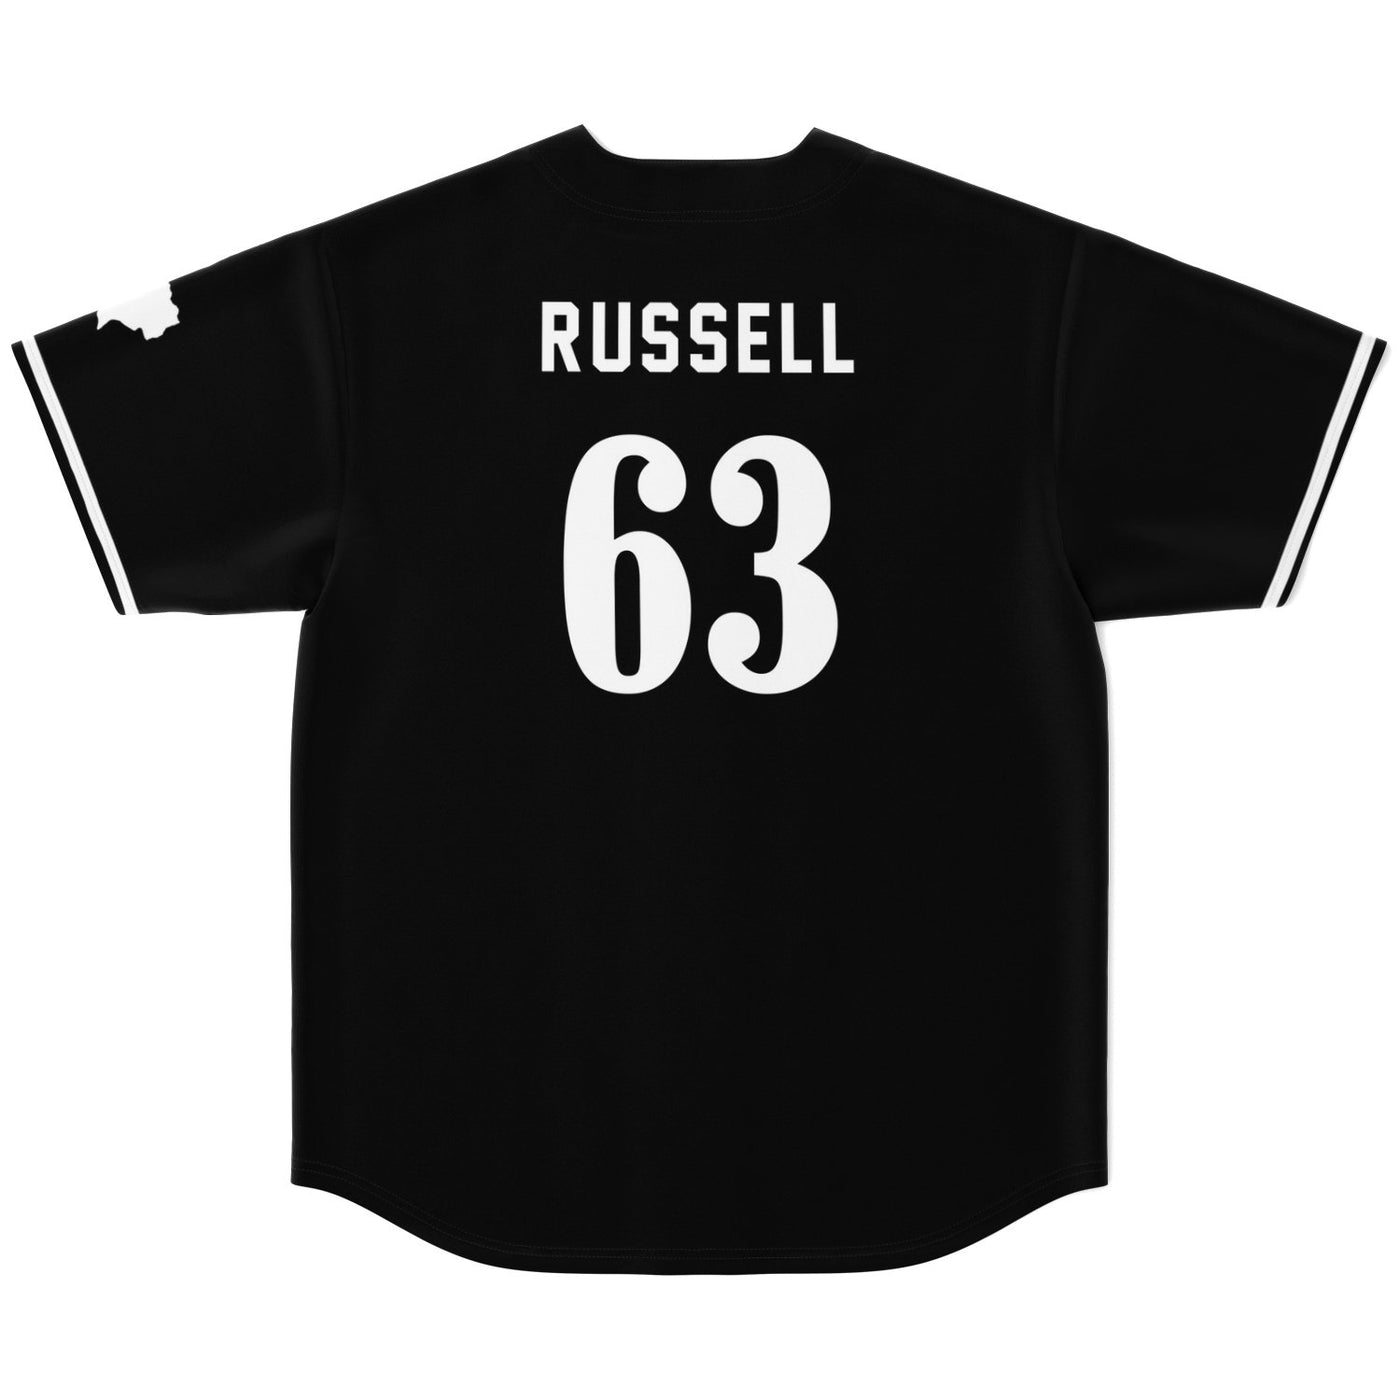 Russell - Jet Black Austin Jersey (Clearance) - Furious Motorsport